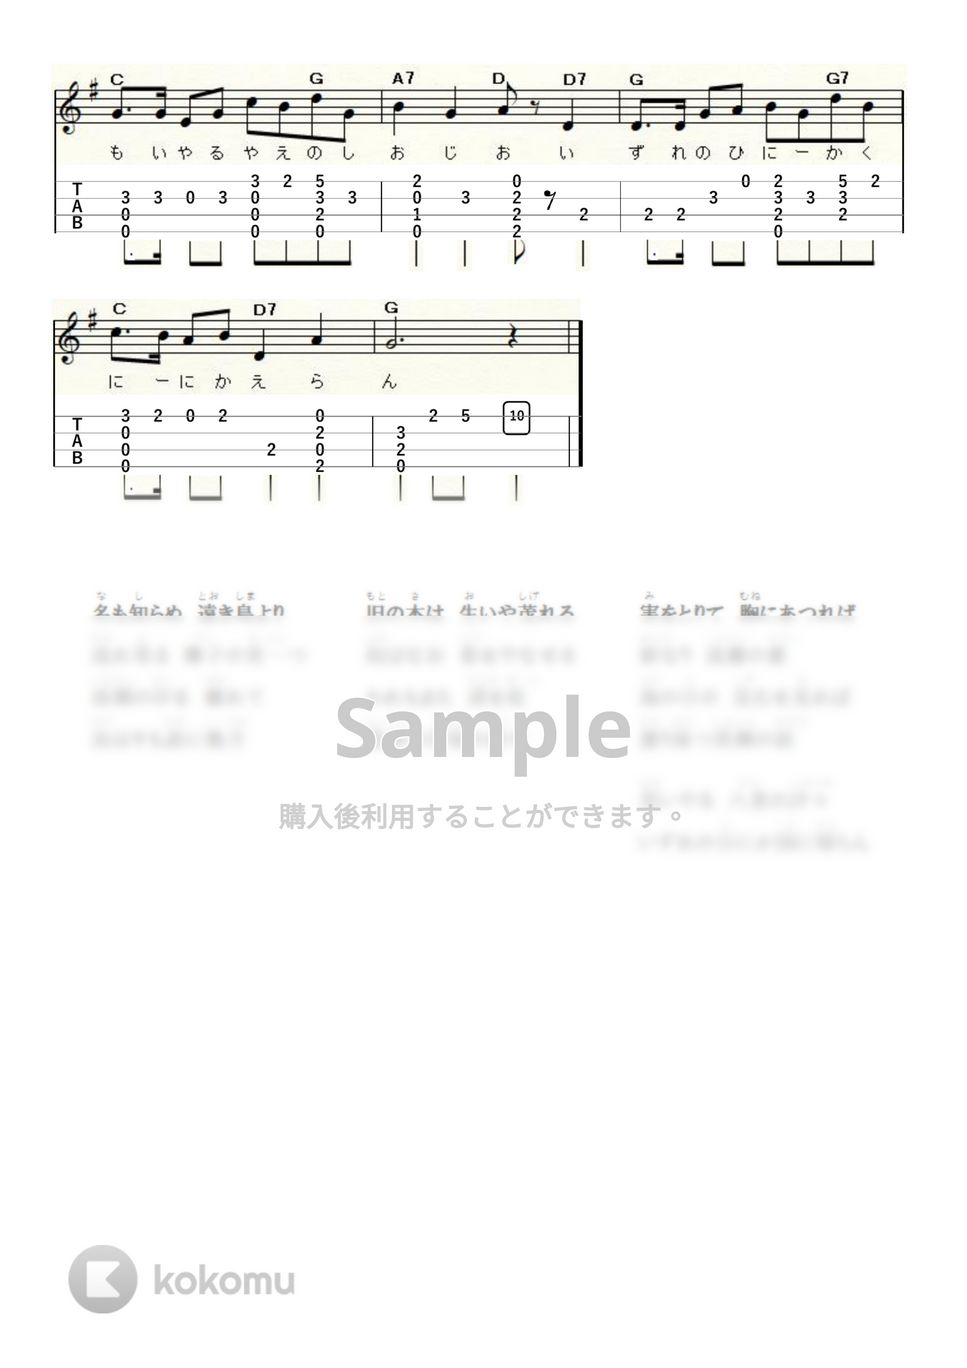 島崎藤村 - 椰子の実 (ｳｸﾚﾚｿﾛ / High-G,Low-G / 初～中級) by ukulelepapa